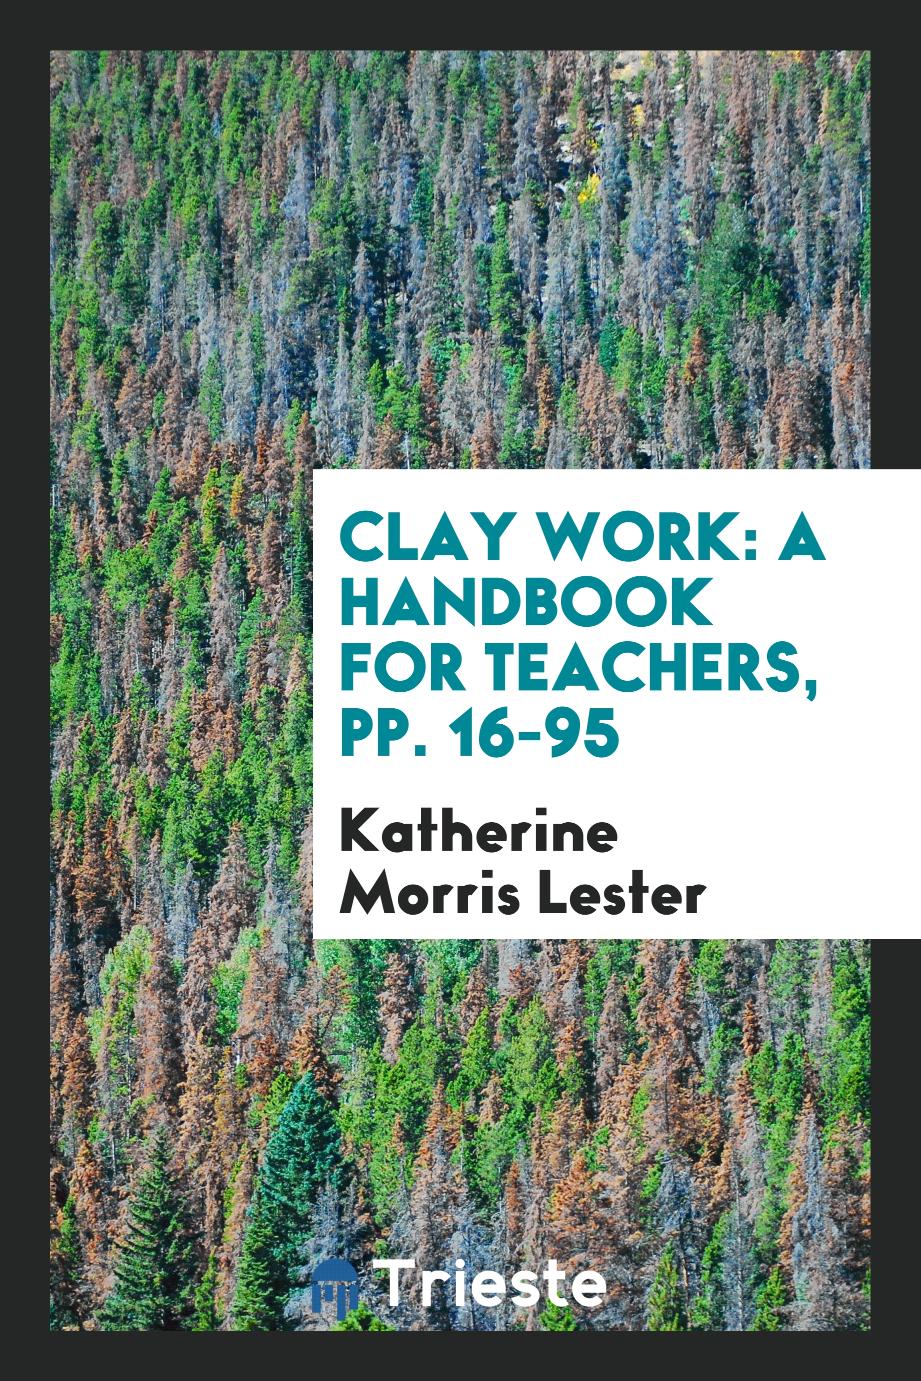 Clay Work: A Handbook for Teachers, pp. 16-95